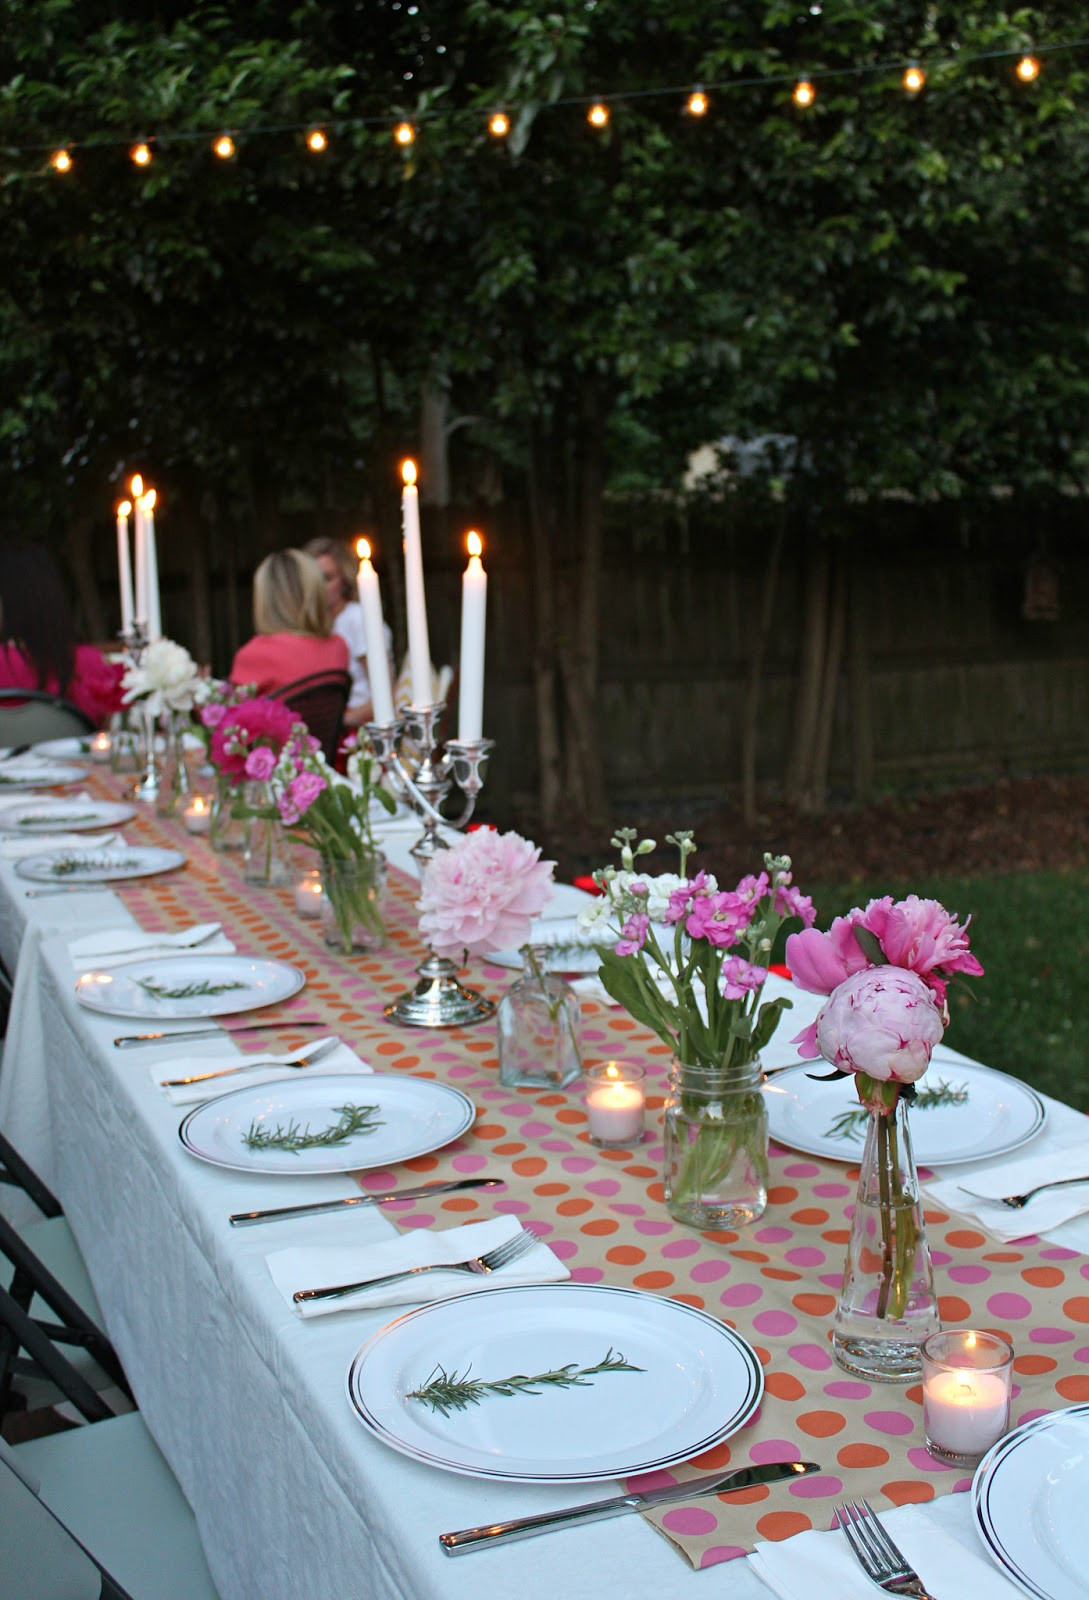 Dinner Party Ideas For 6
 A Backyard Dinner Party Carolina Charm